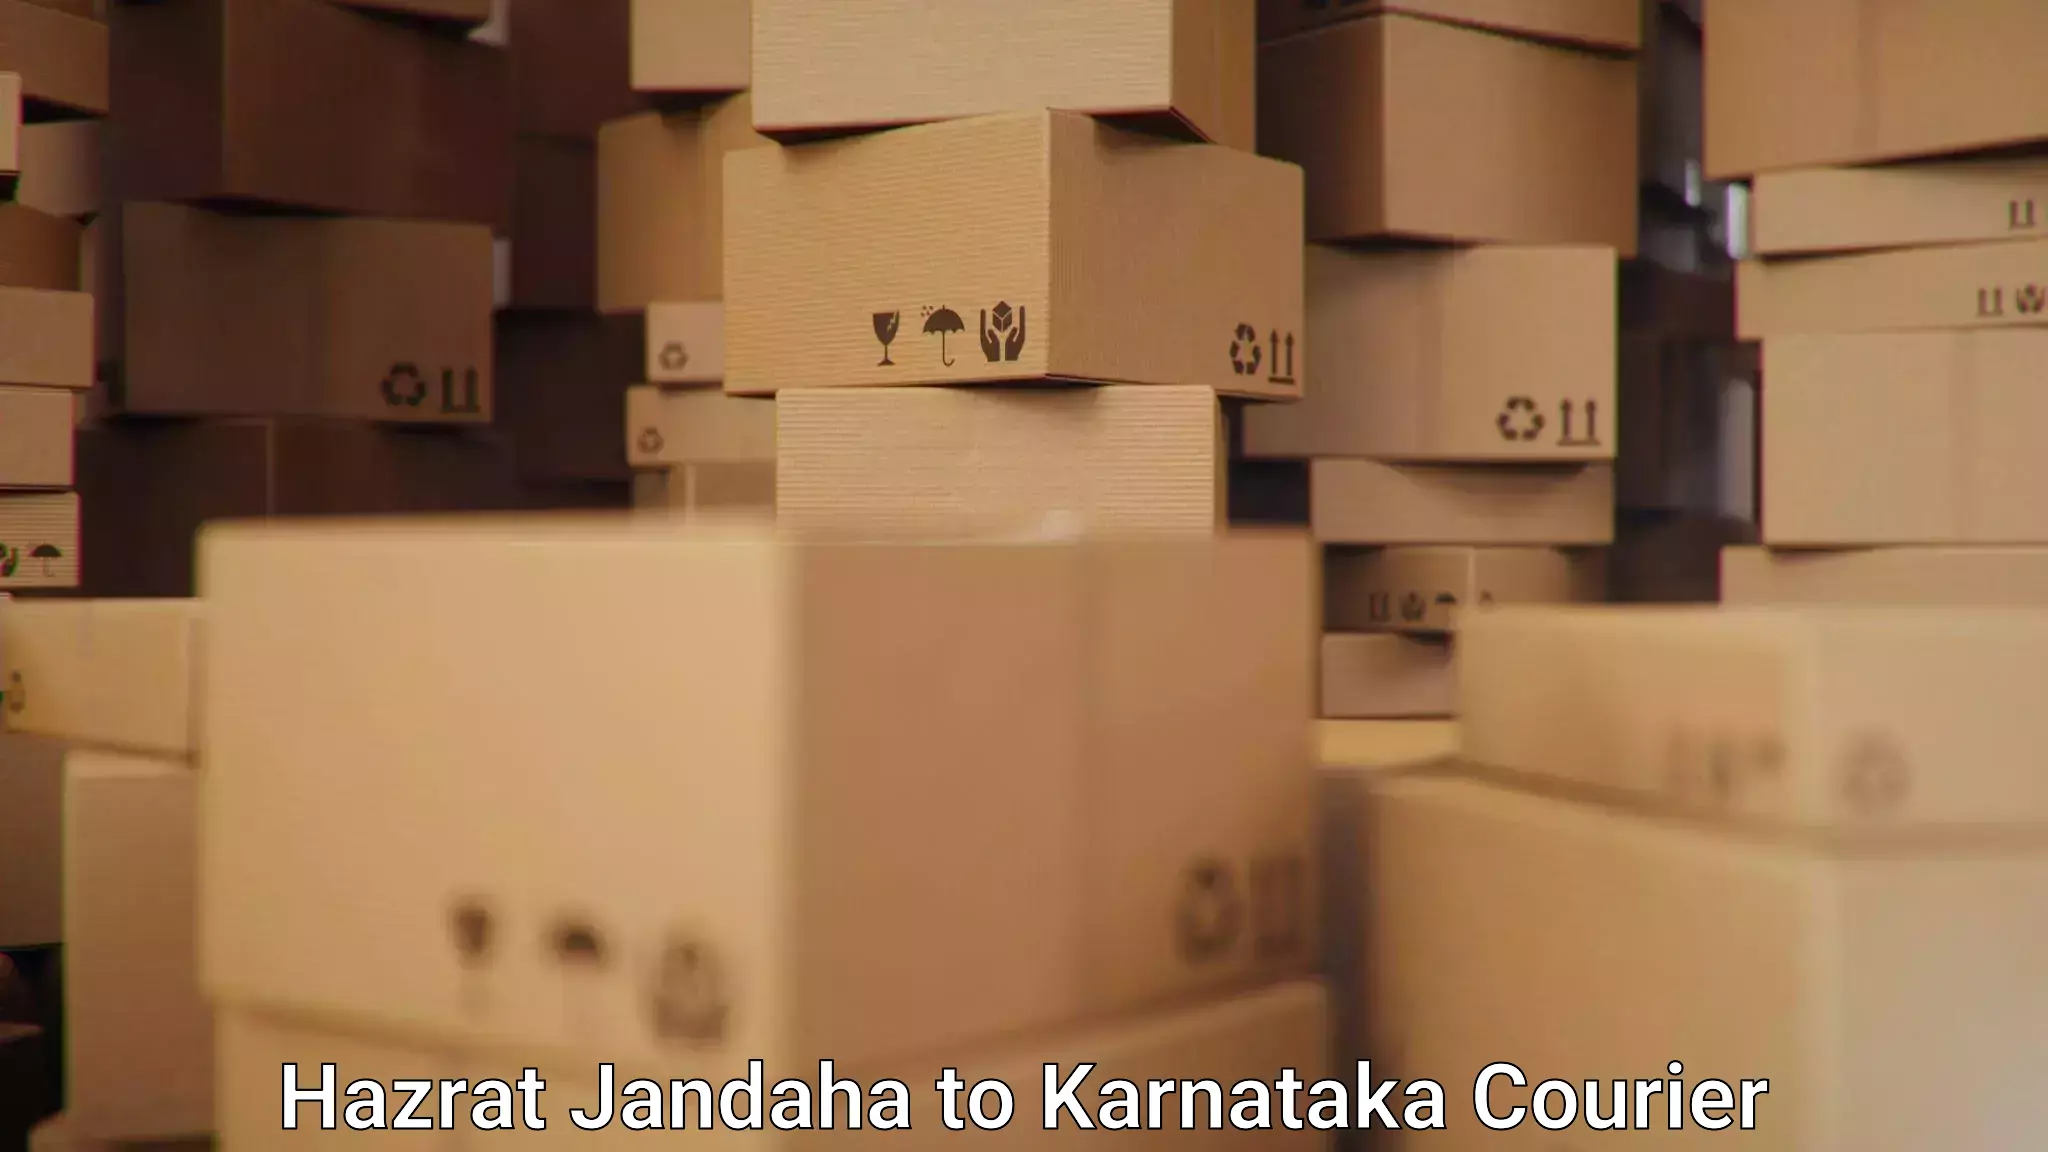 Efficient shipping platforms Hazrat Jandaha to Karnataka